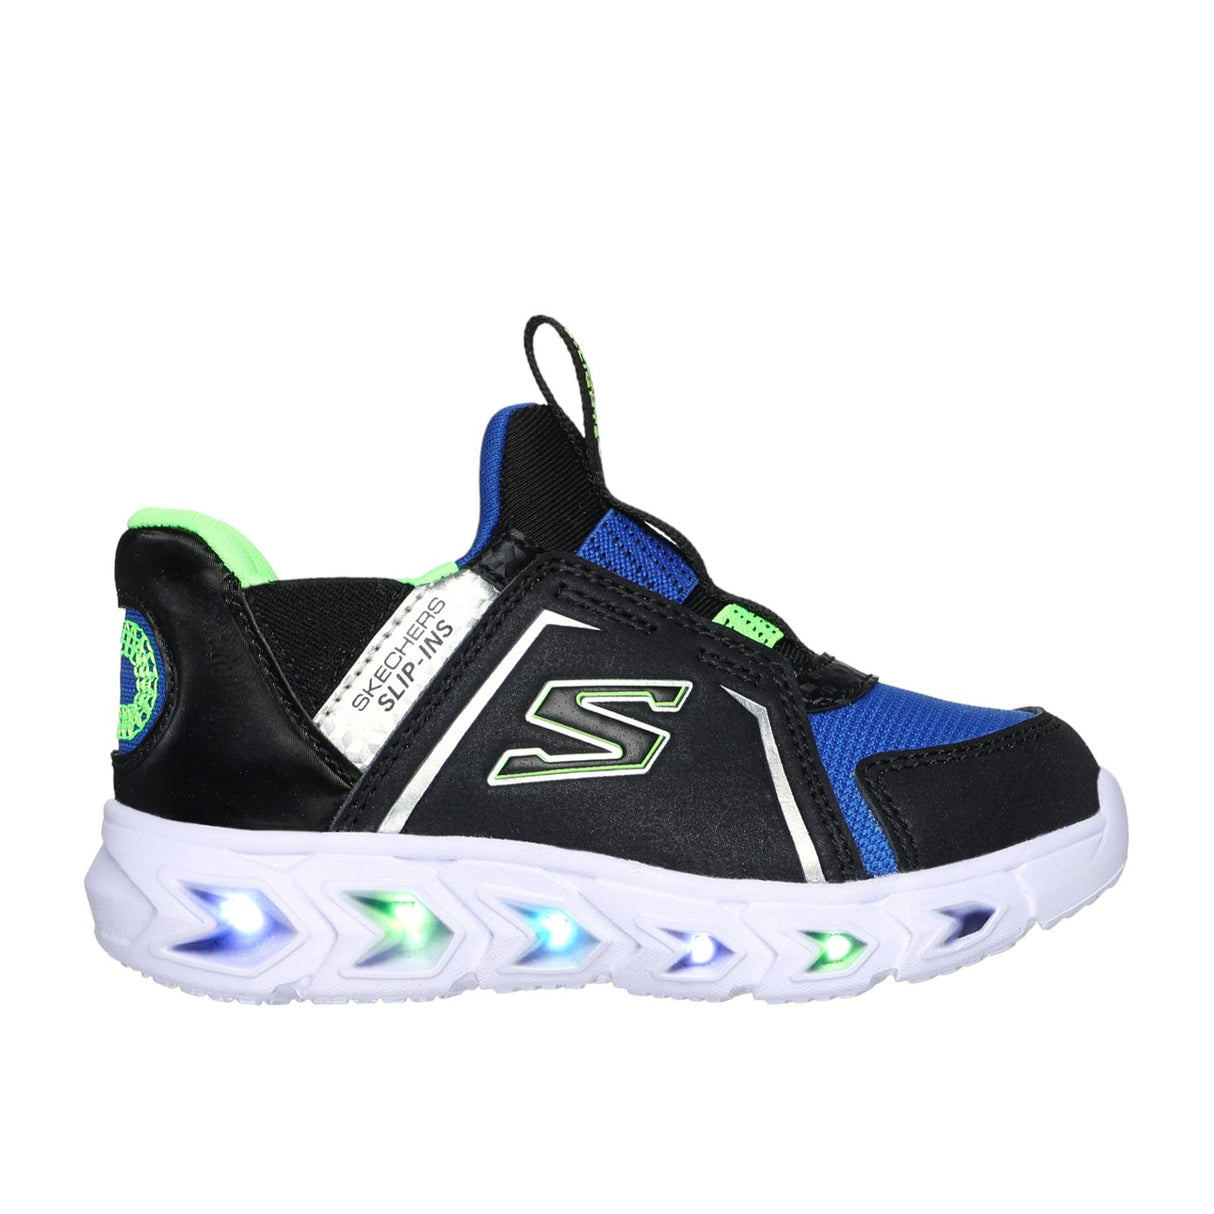 Skechers Slip-Ins HypnoFlash 2.0 Boys Shoes